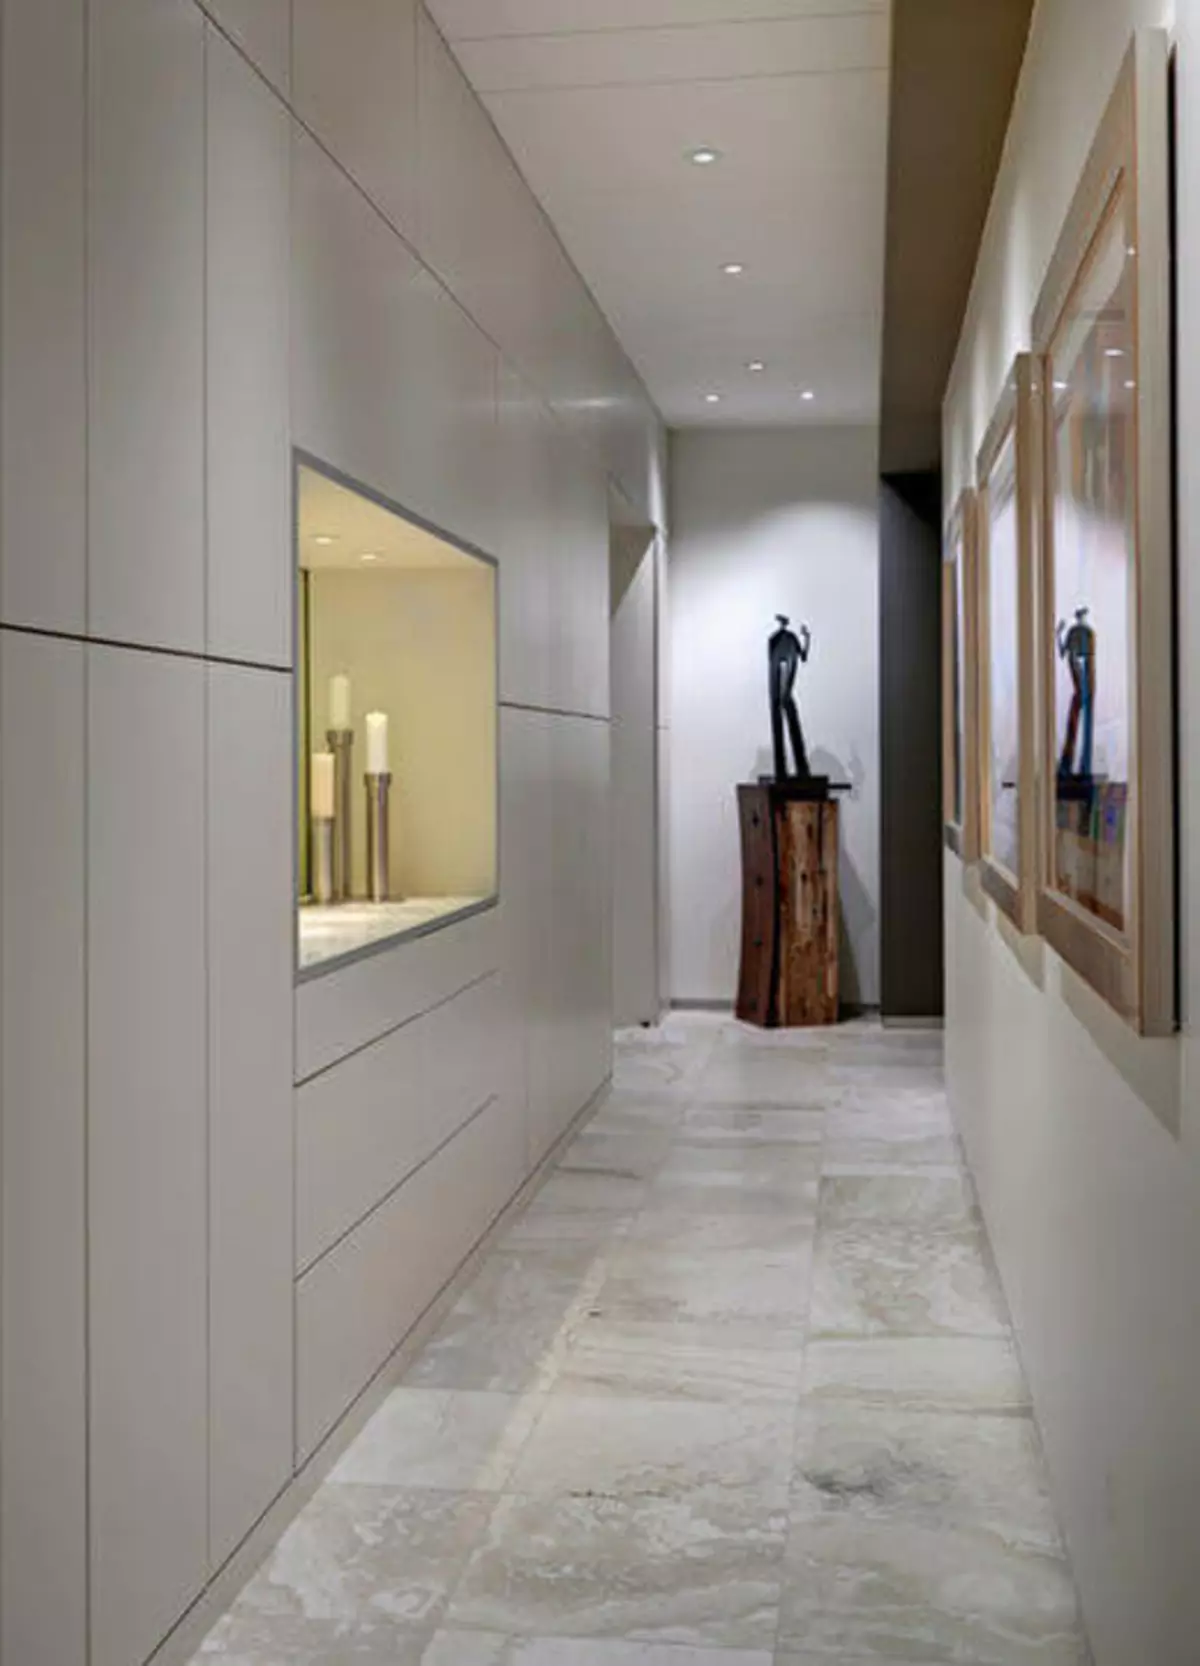 Pločice na podu u hodniku (99 fotografija): Opcije za dizajn poda u hodniku. Obrasci izrađeni od porculanskih kamenih softvera, pločica i drugih prekrasnih opcija 9181_35